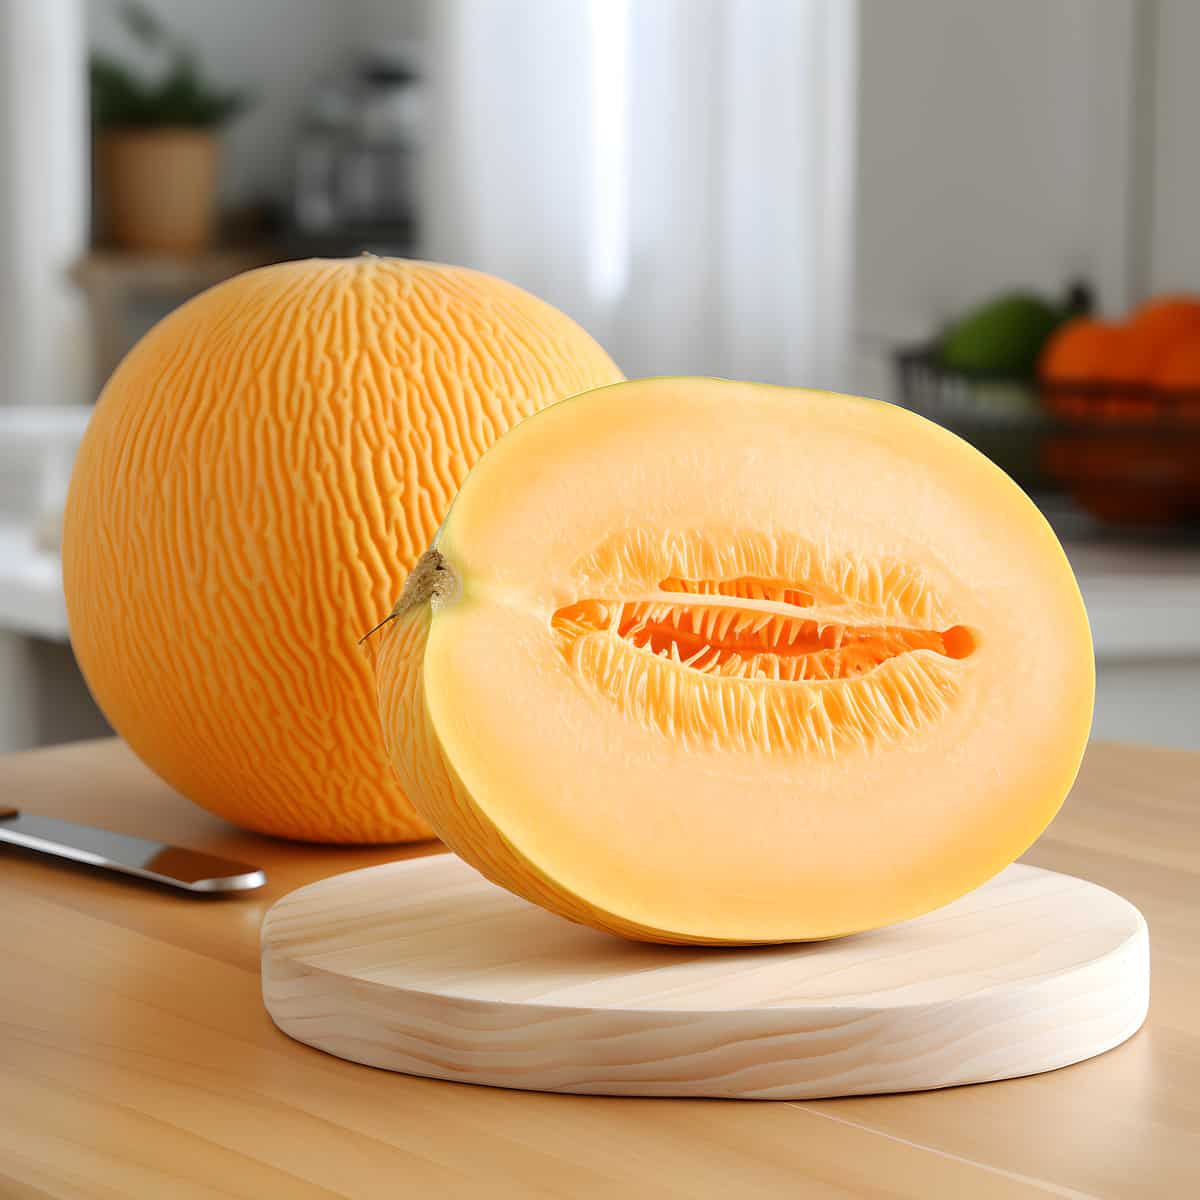 Kolkhoznitsa Melon on a kitchen counter